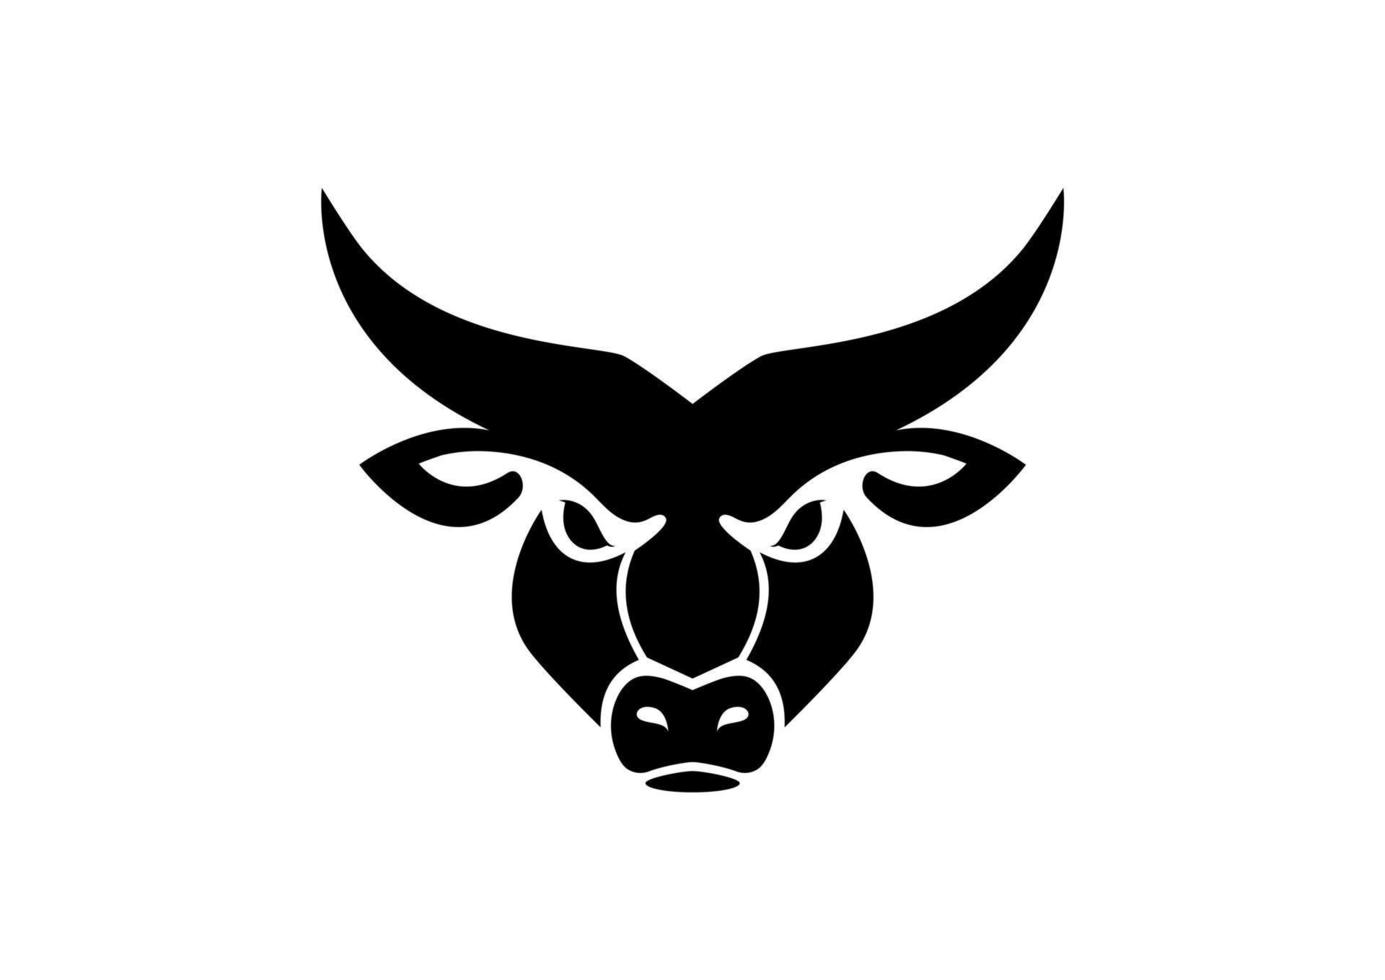 Bull Head Icon Logo Flat Design Black and White vector